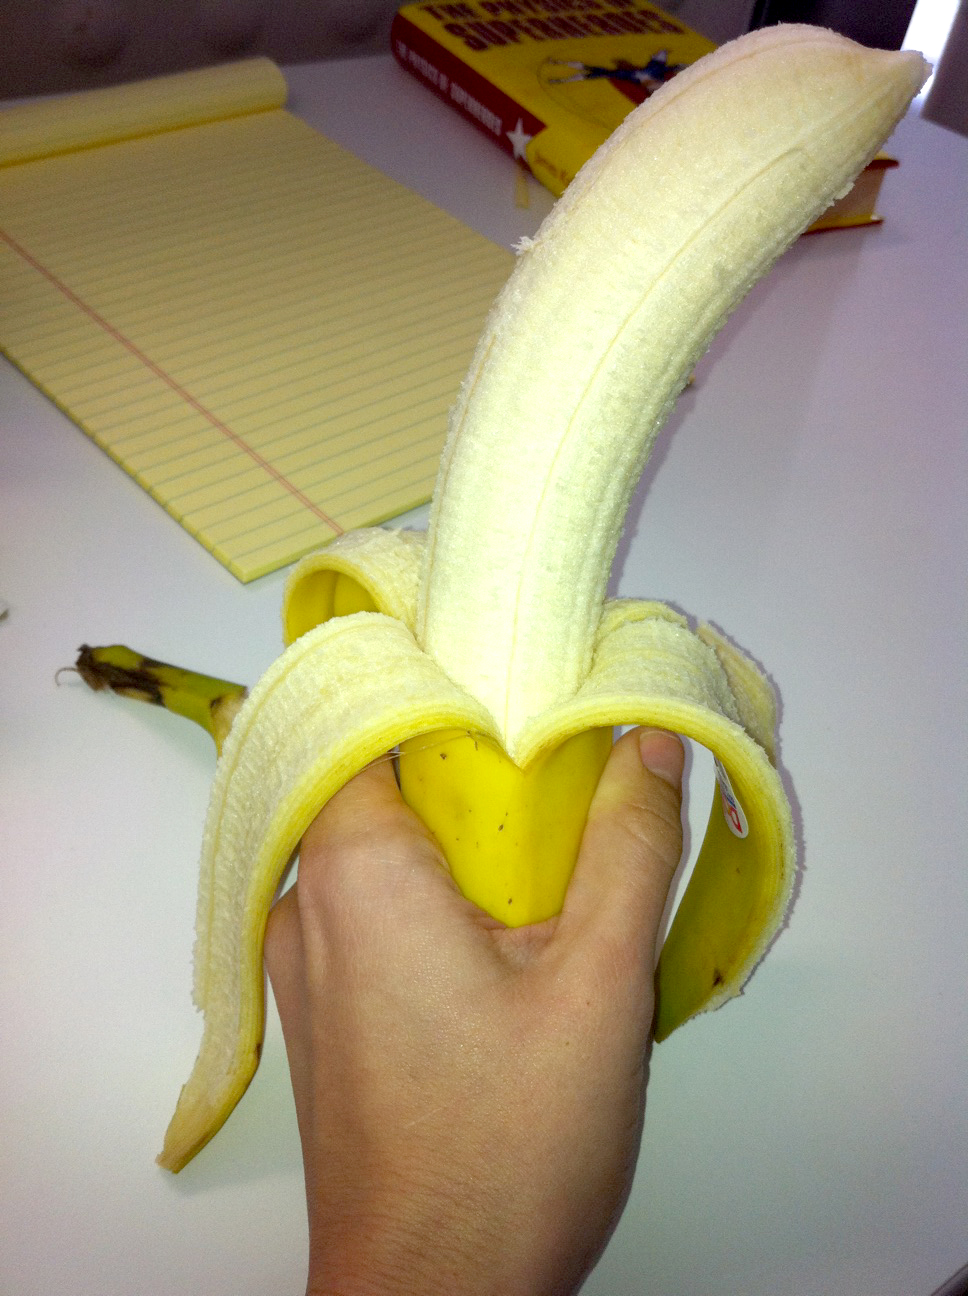 Большой банан